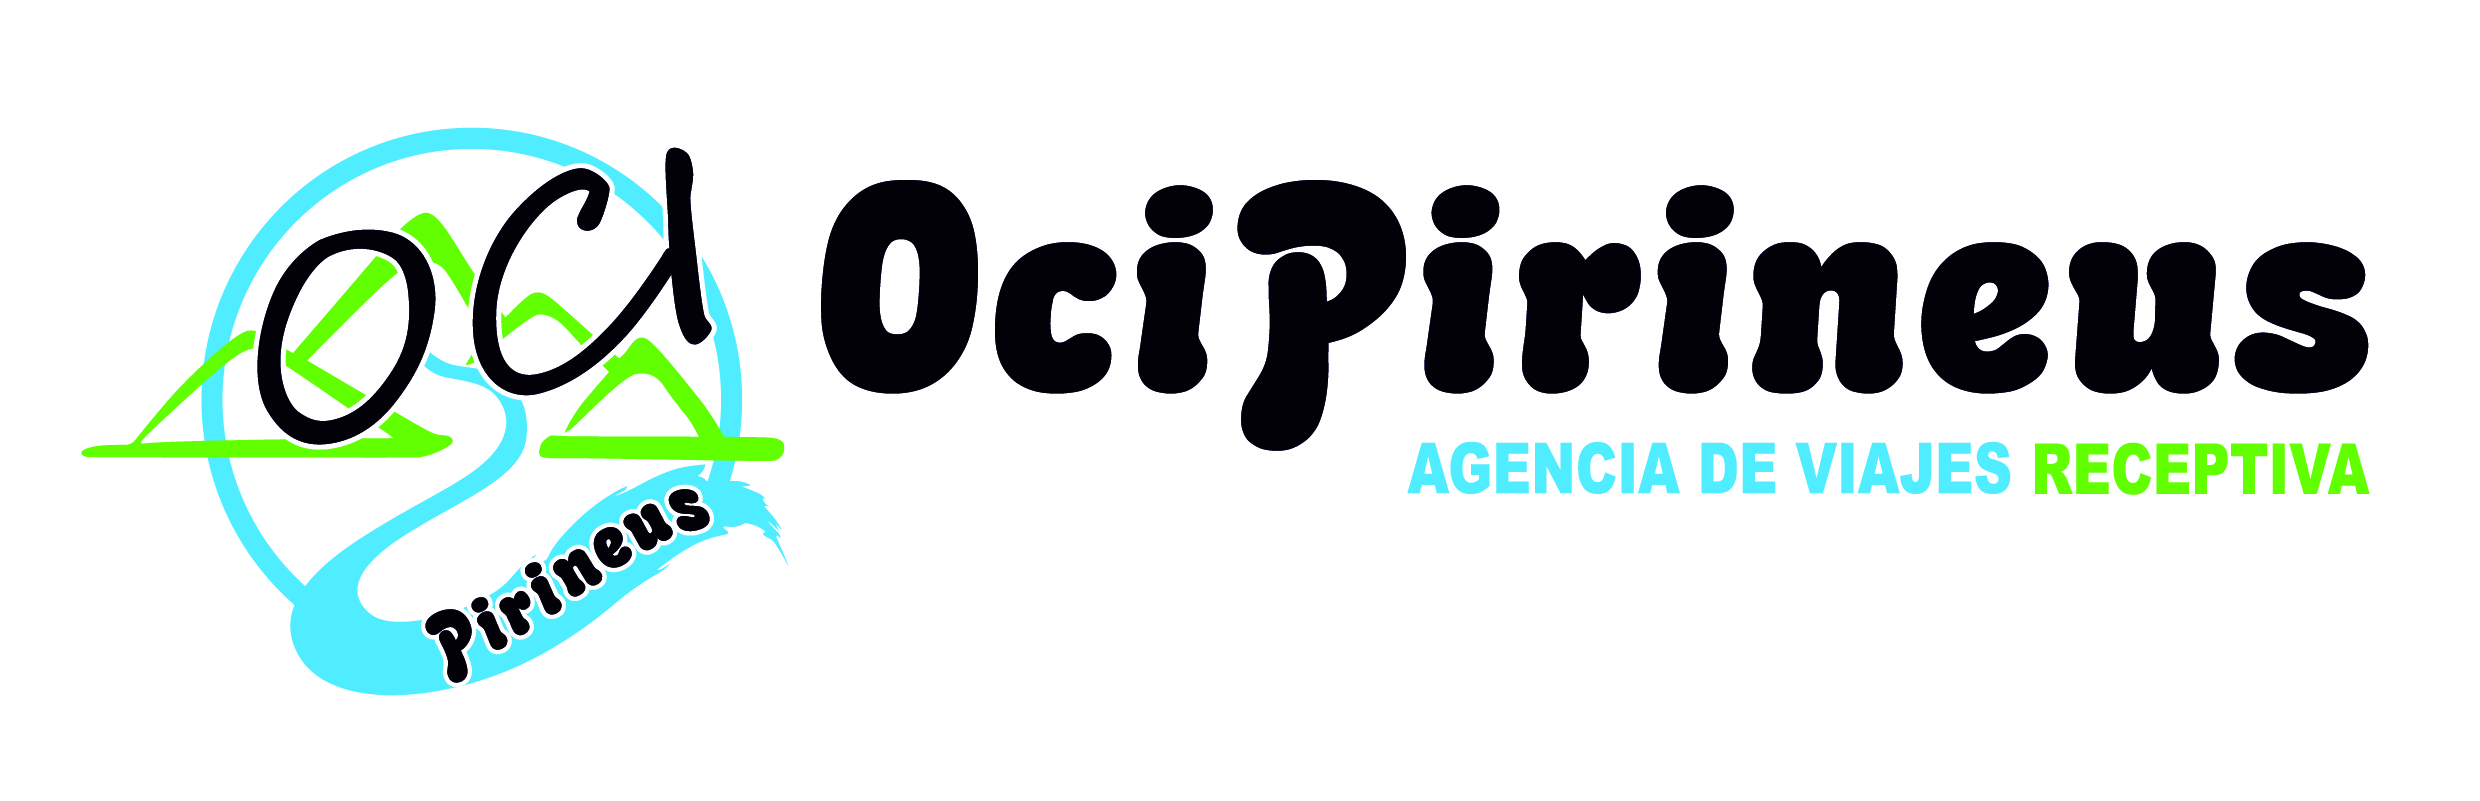 Logotip Ocipirineus